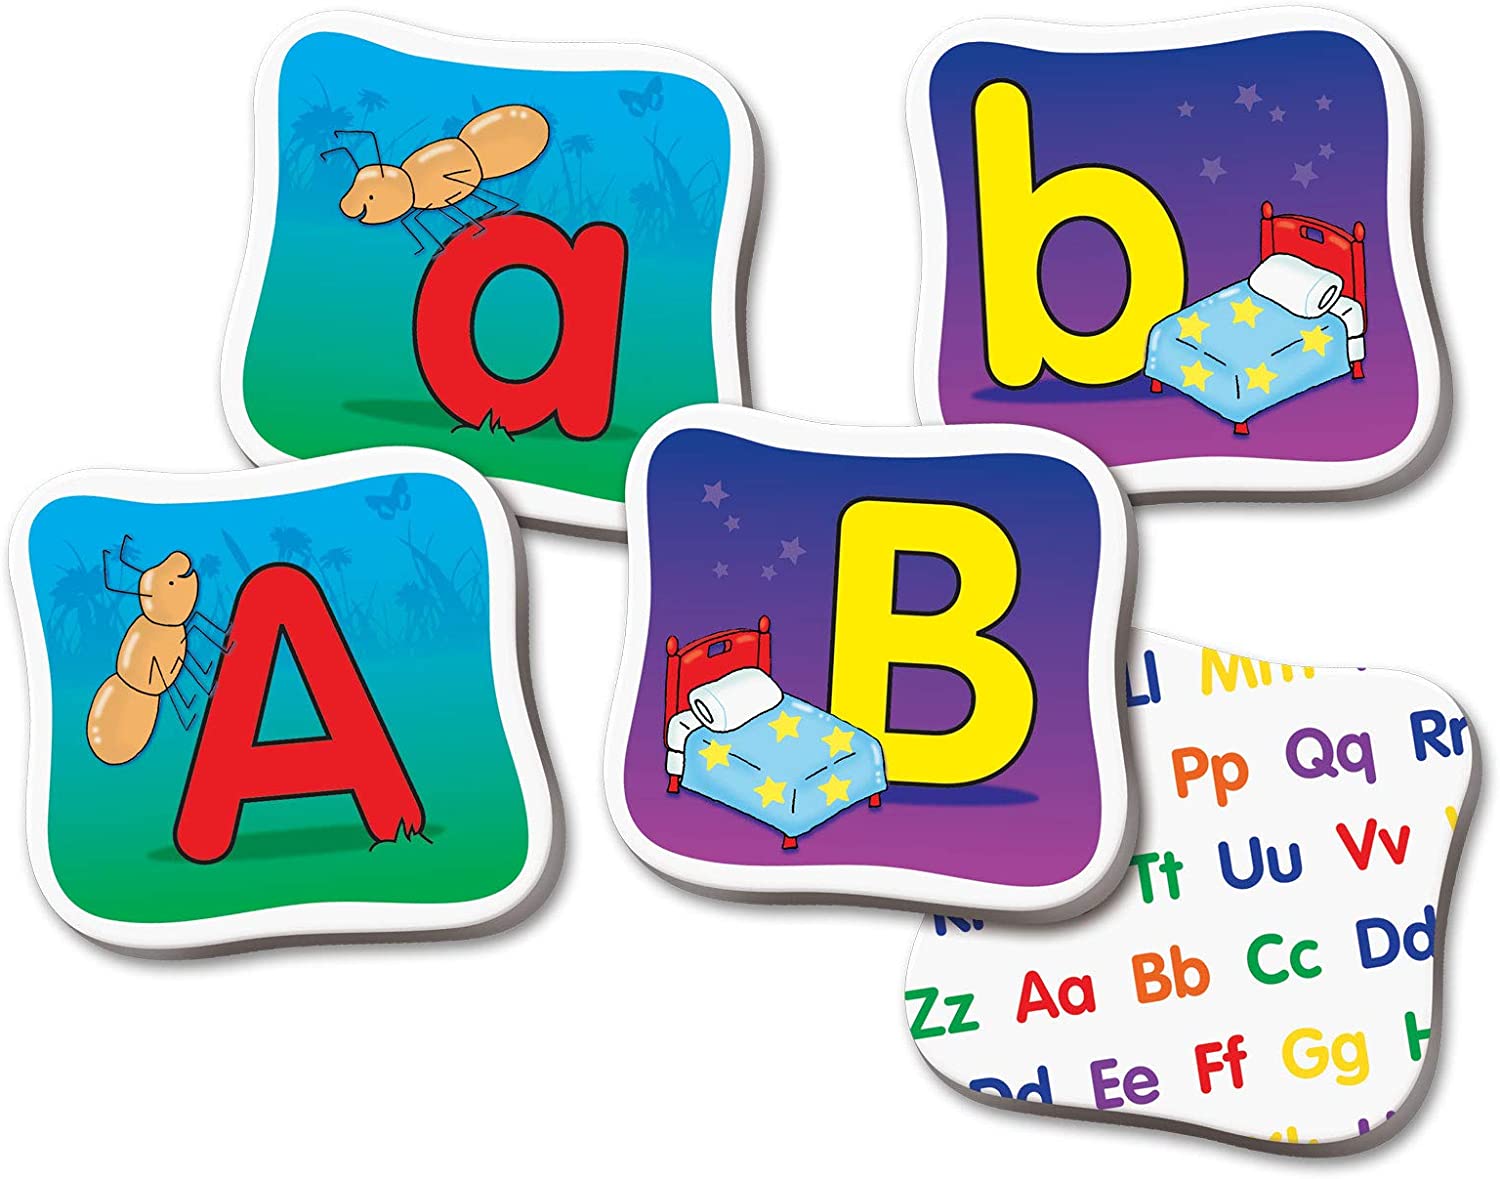 Alphabet Memory Puzzle Game- 26 Pieces